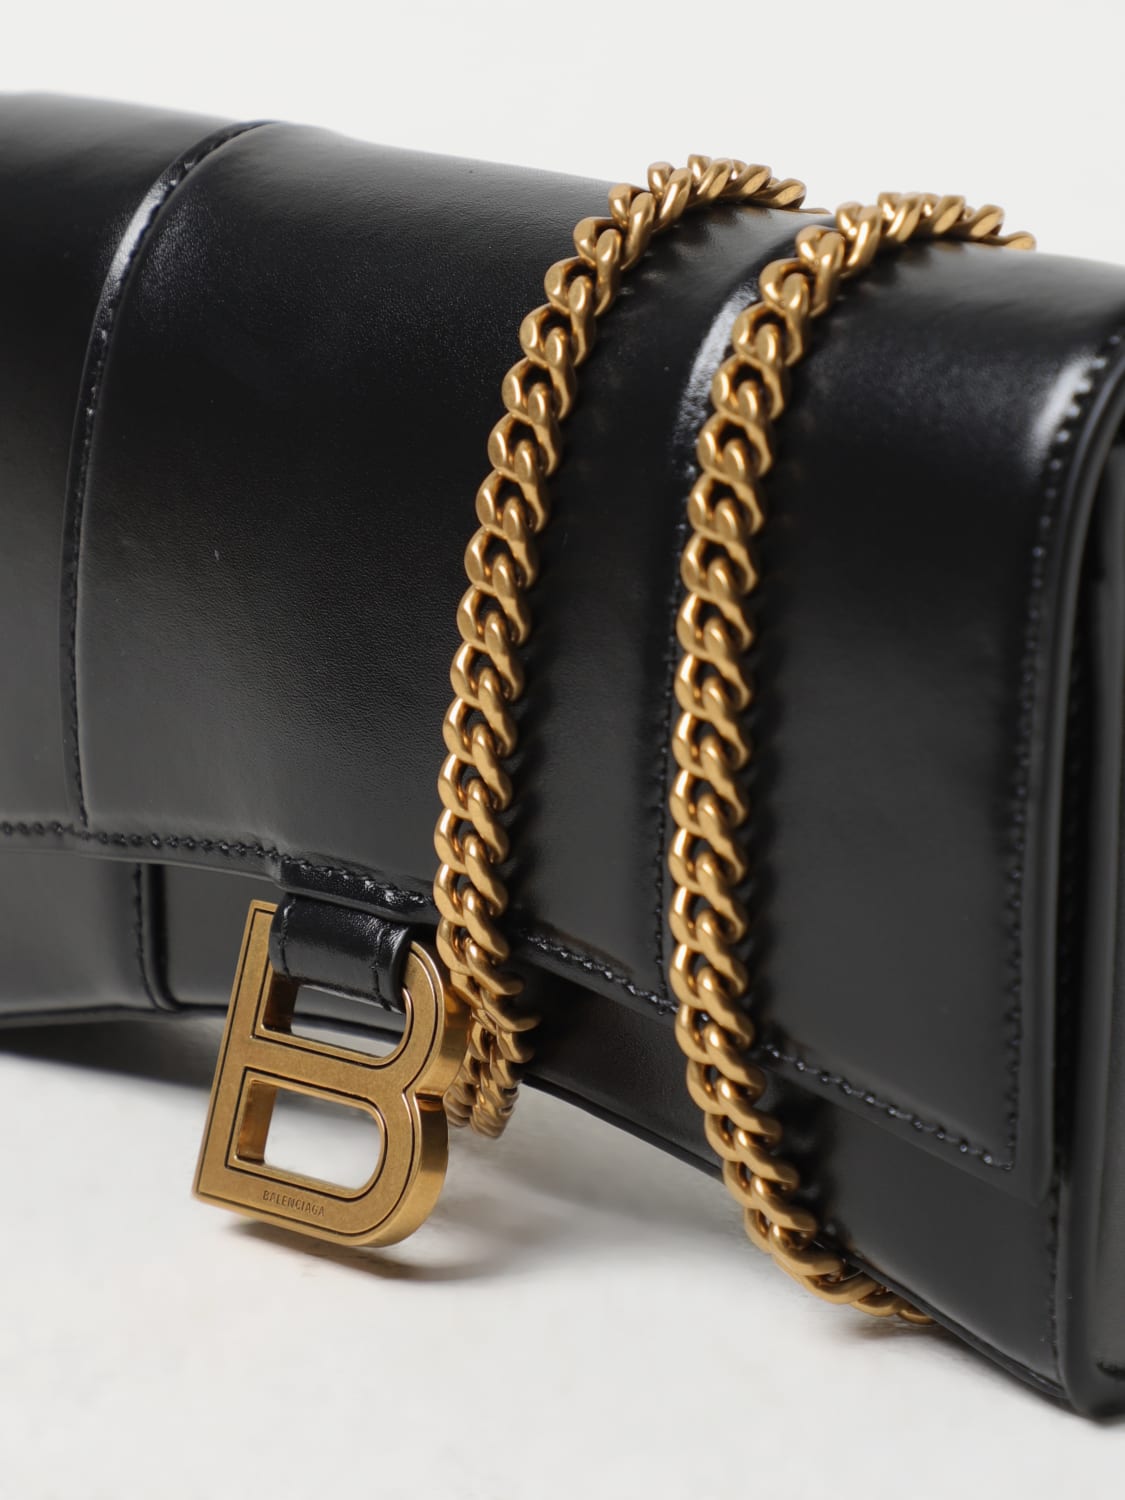 Balenciaga Hourglass Mini Leather Crossbody Bag in Black